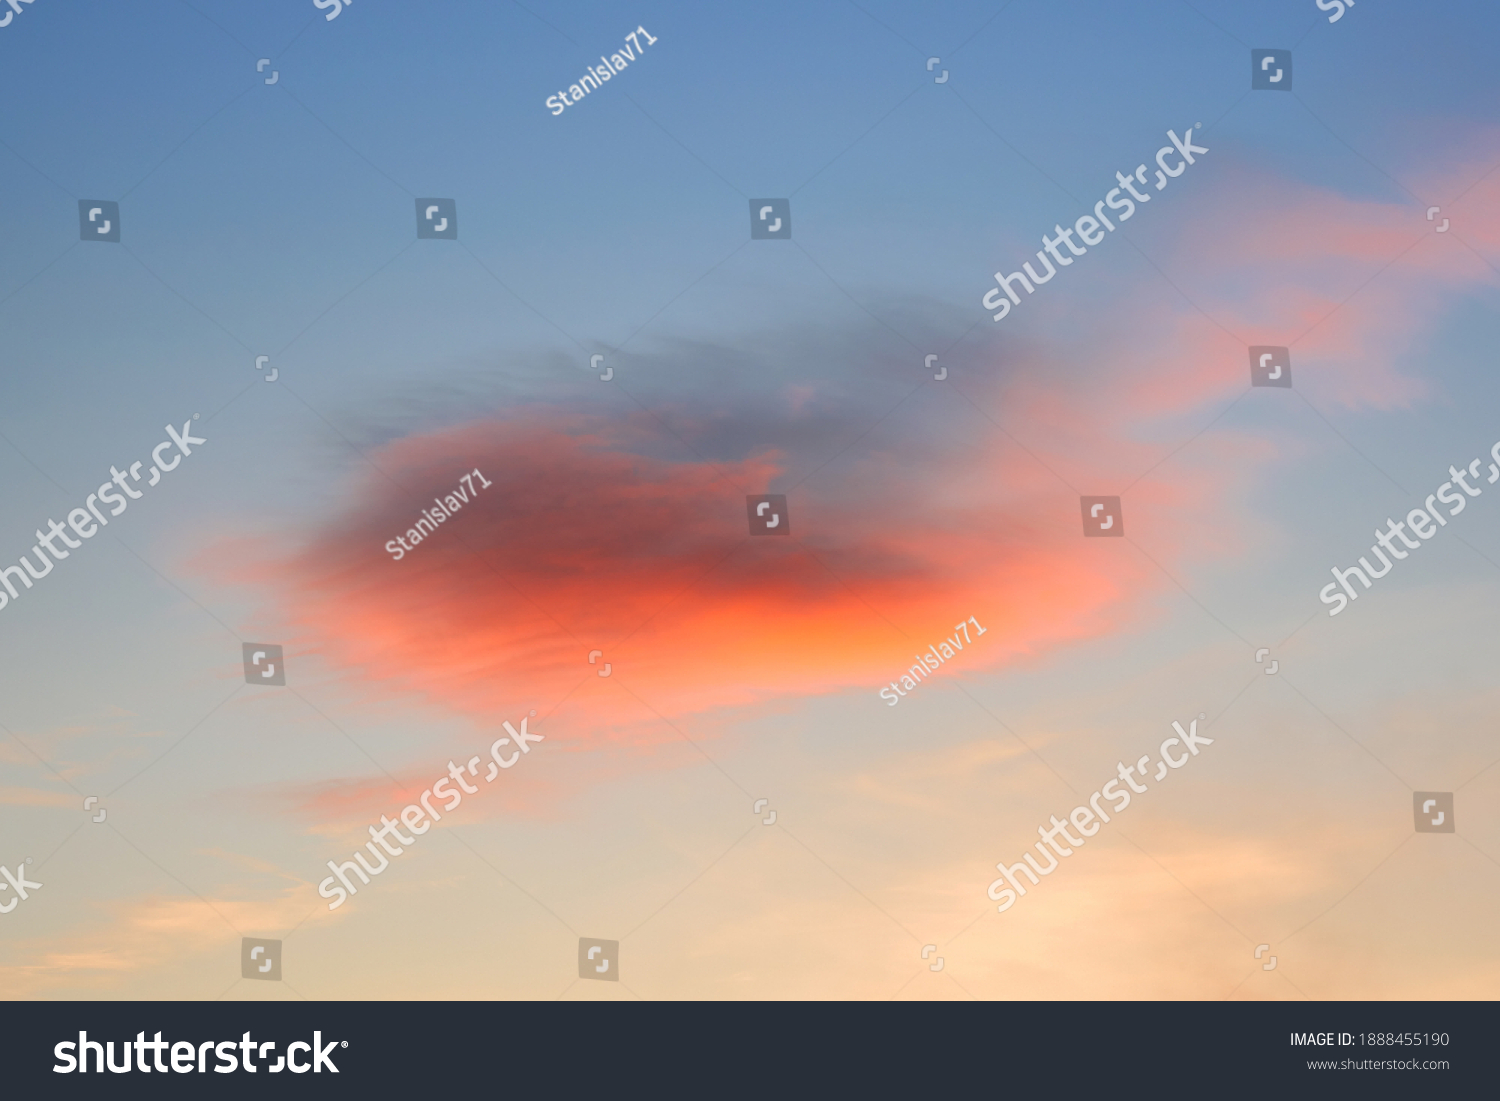 2,106 Strange cloud formation Images, Stock Photos & Vectors Shutterstock